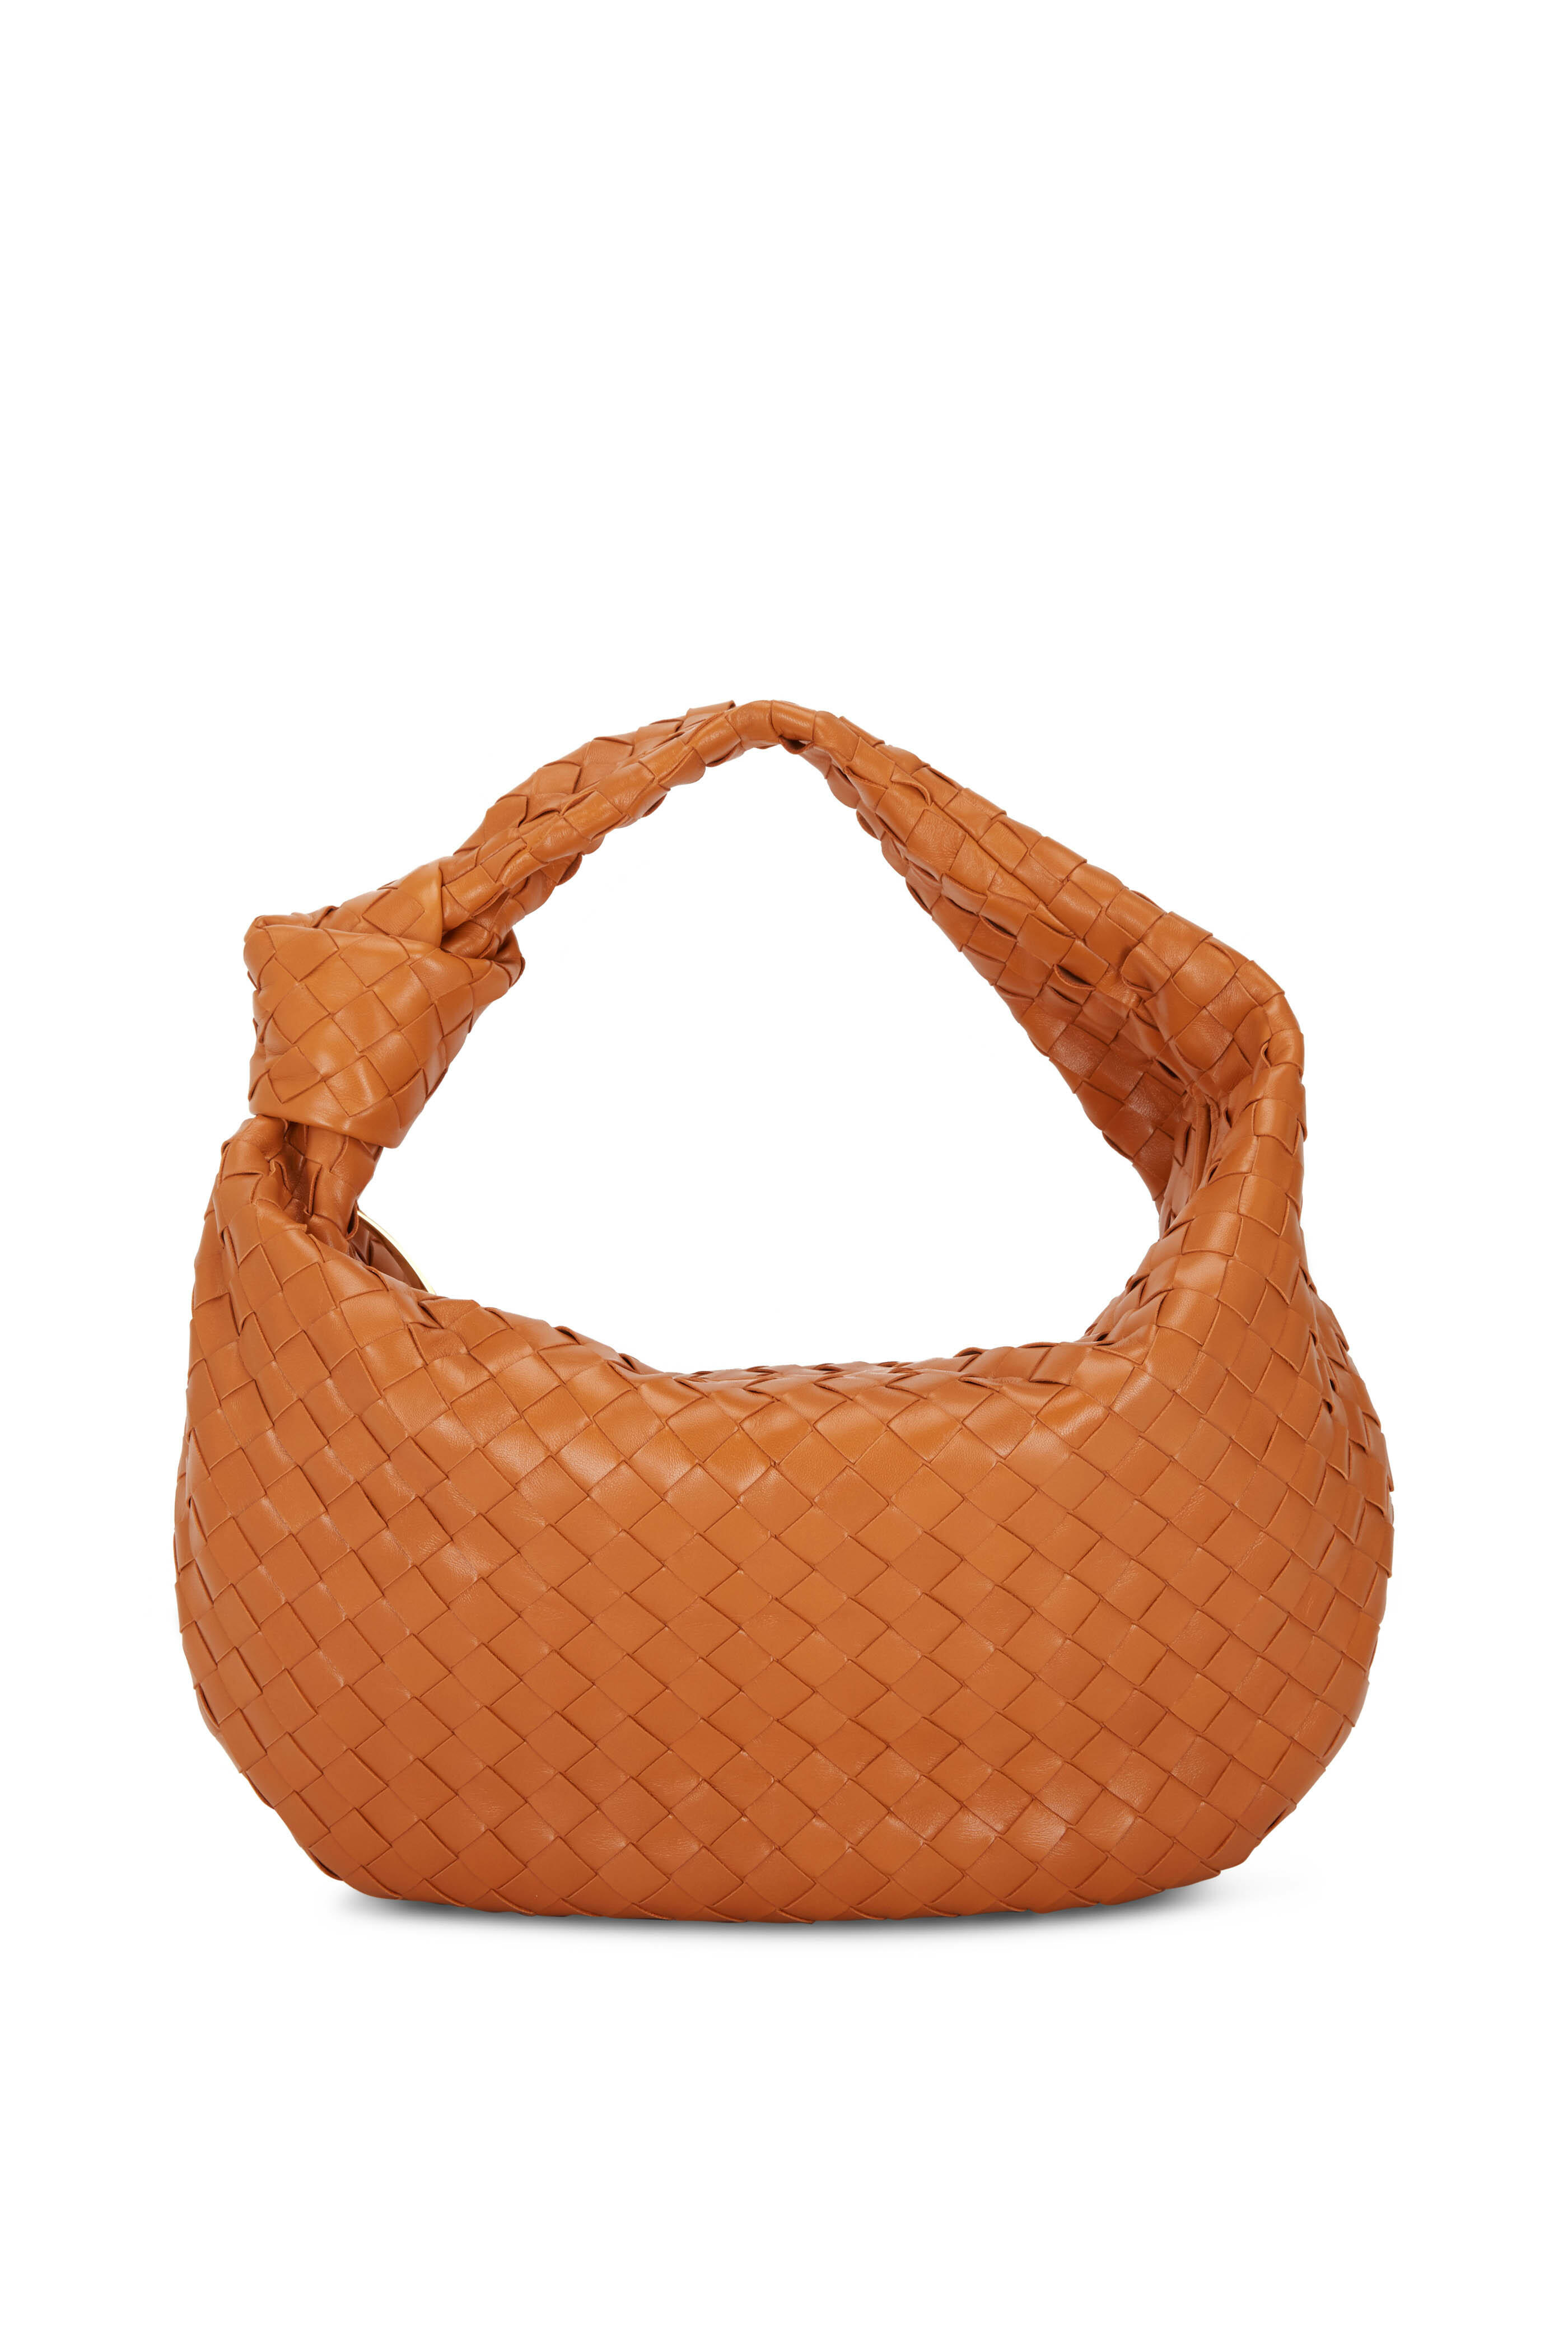 Bottega Veneta The Medium Jodie Leather Bag in Brown